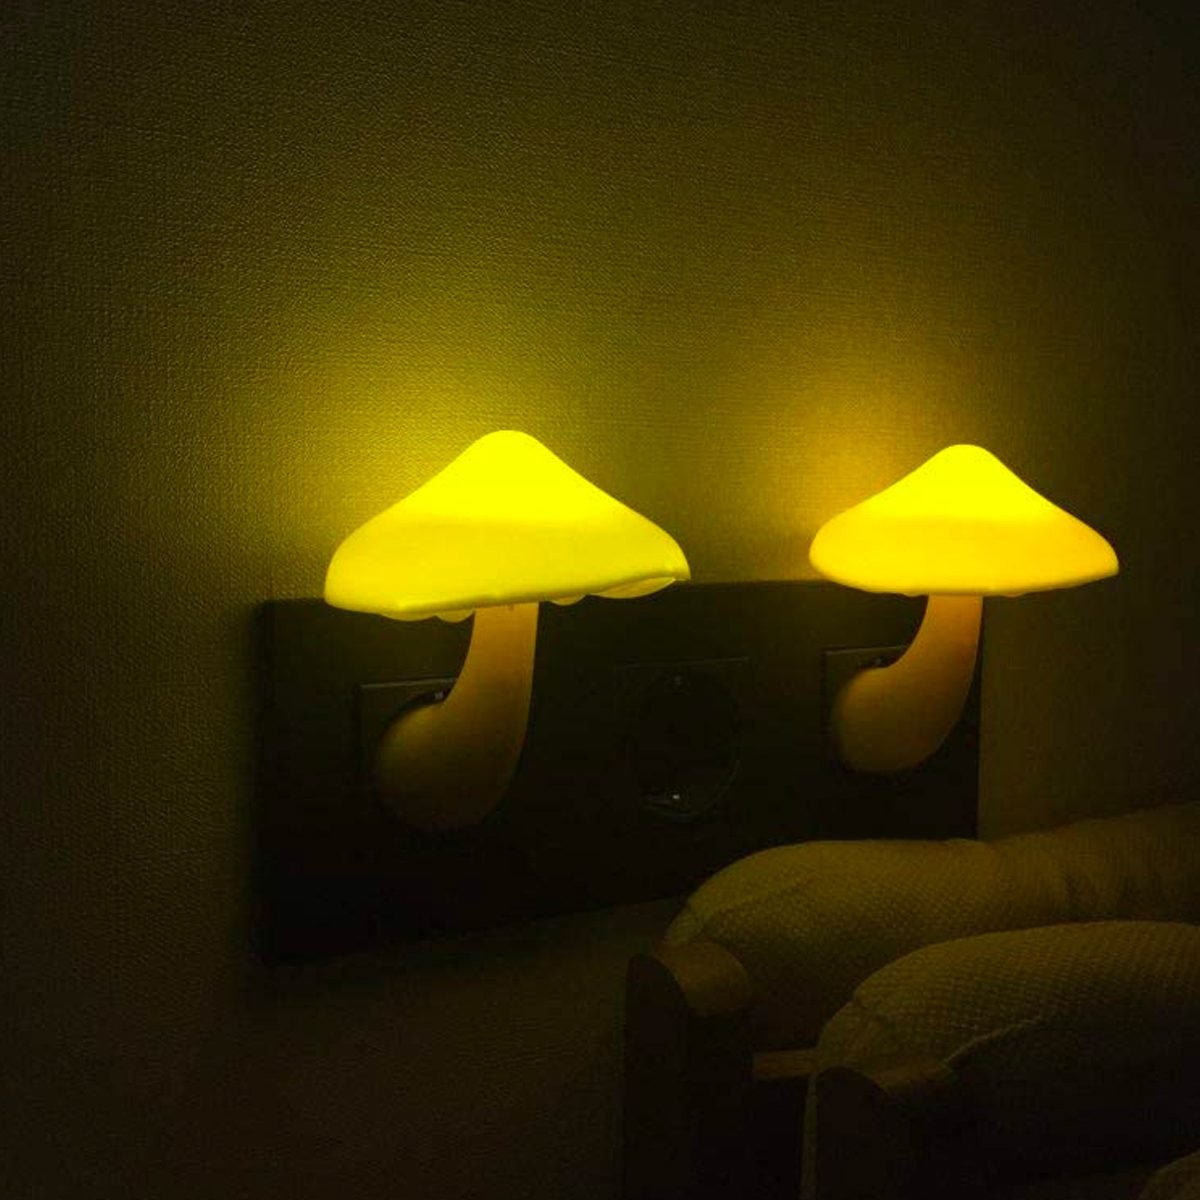 Ausaye 2 Pack Mushroom Night Light Plug In Lamp Ecomm Amazon.com